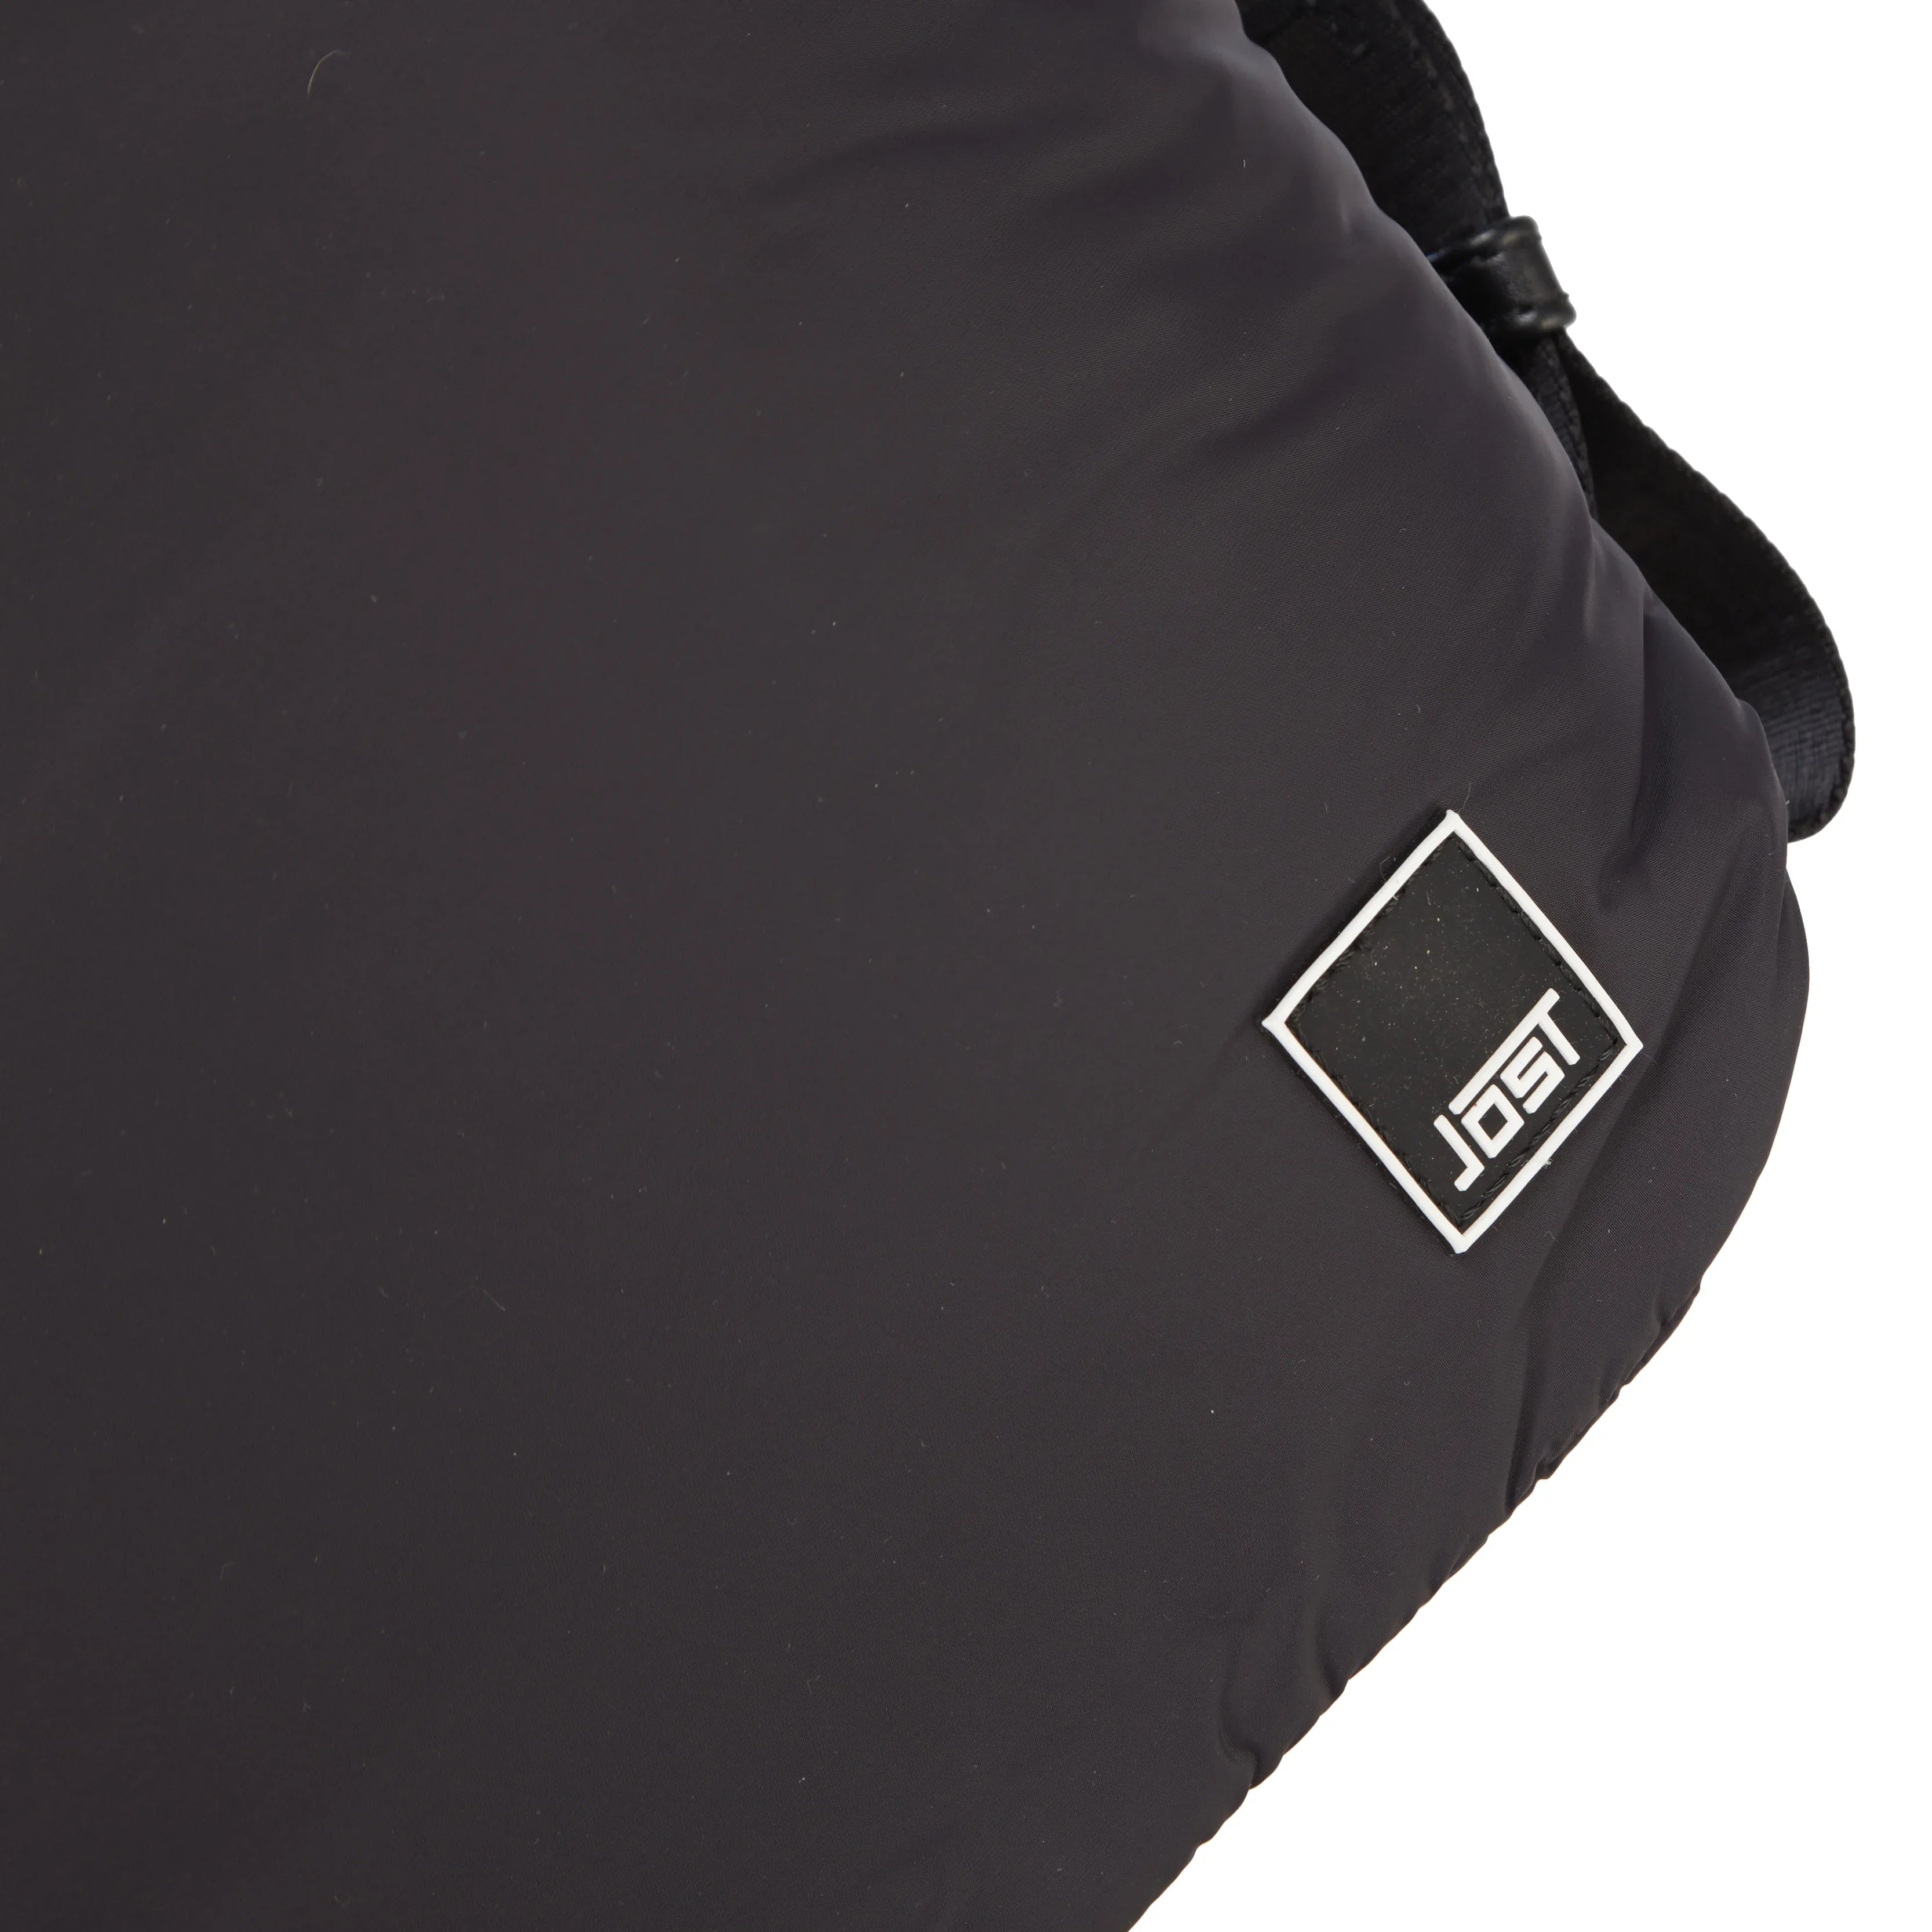 Jost Askim 3-Way-Backpack 34 cm - Black